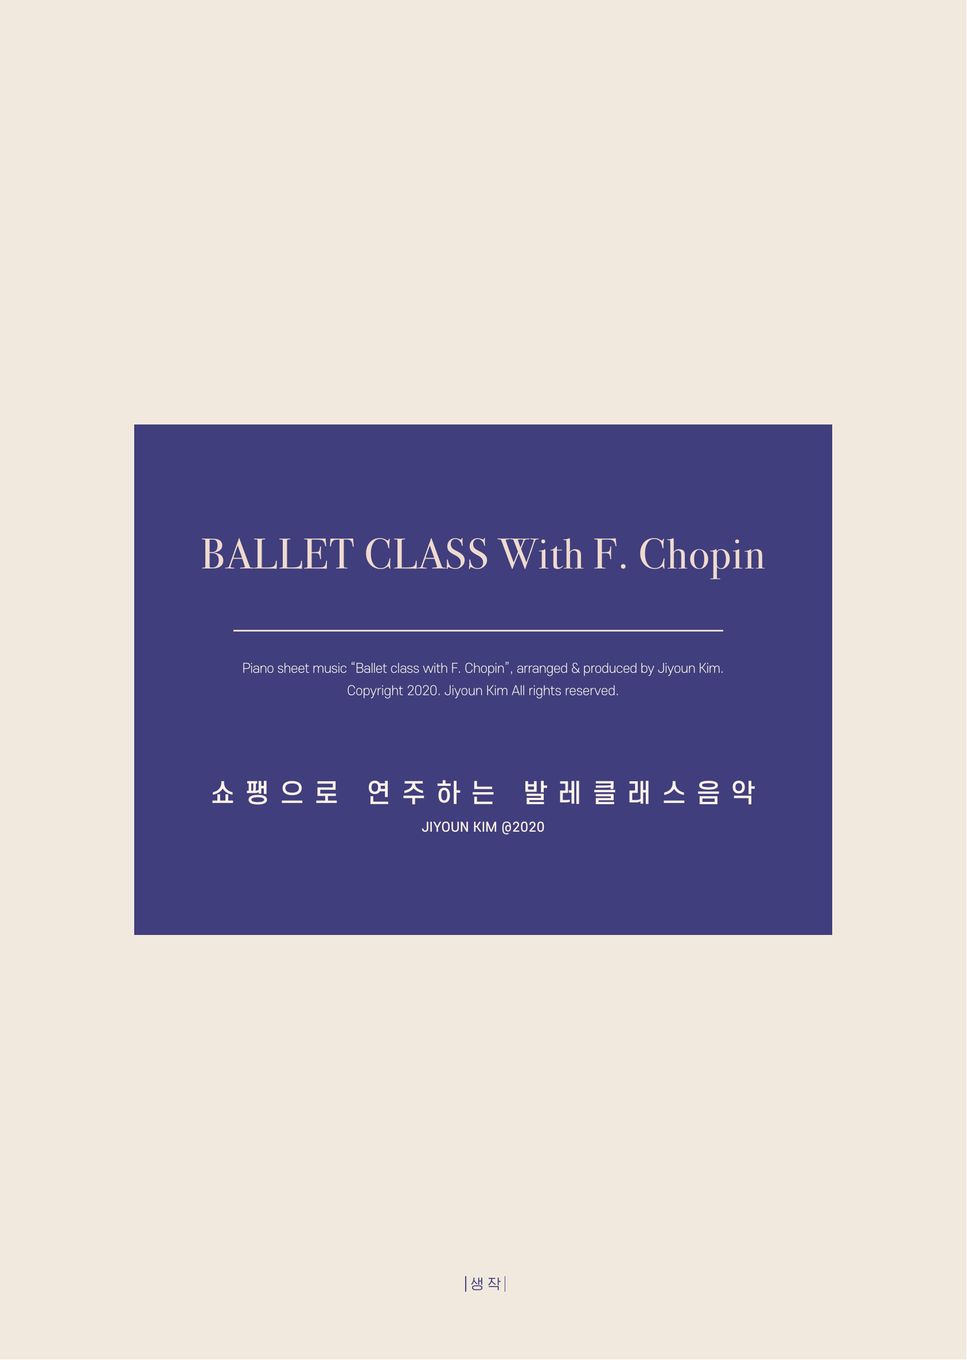 F. Chopin - Ballet Class with F. Chopin - 10. Rond de jambe en l’air by Jiyoun KIM